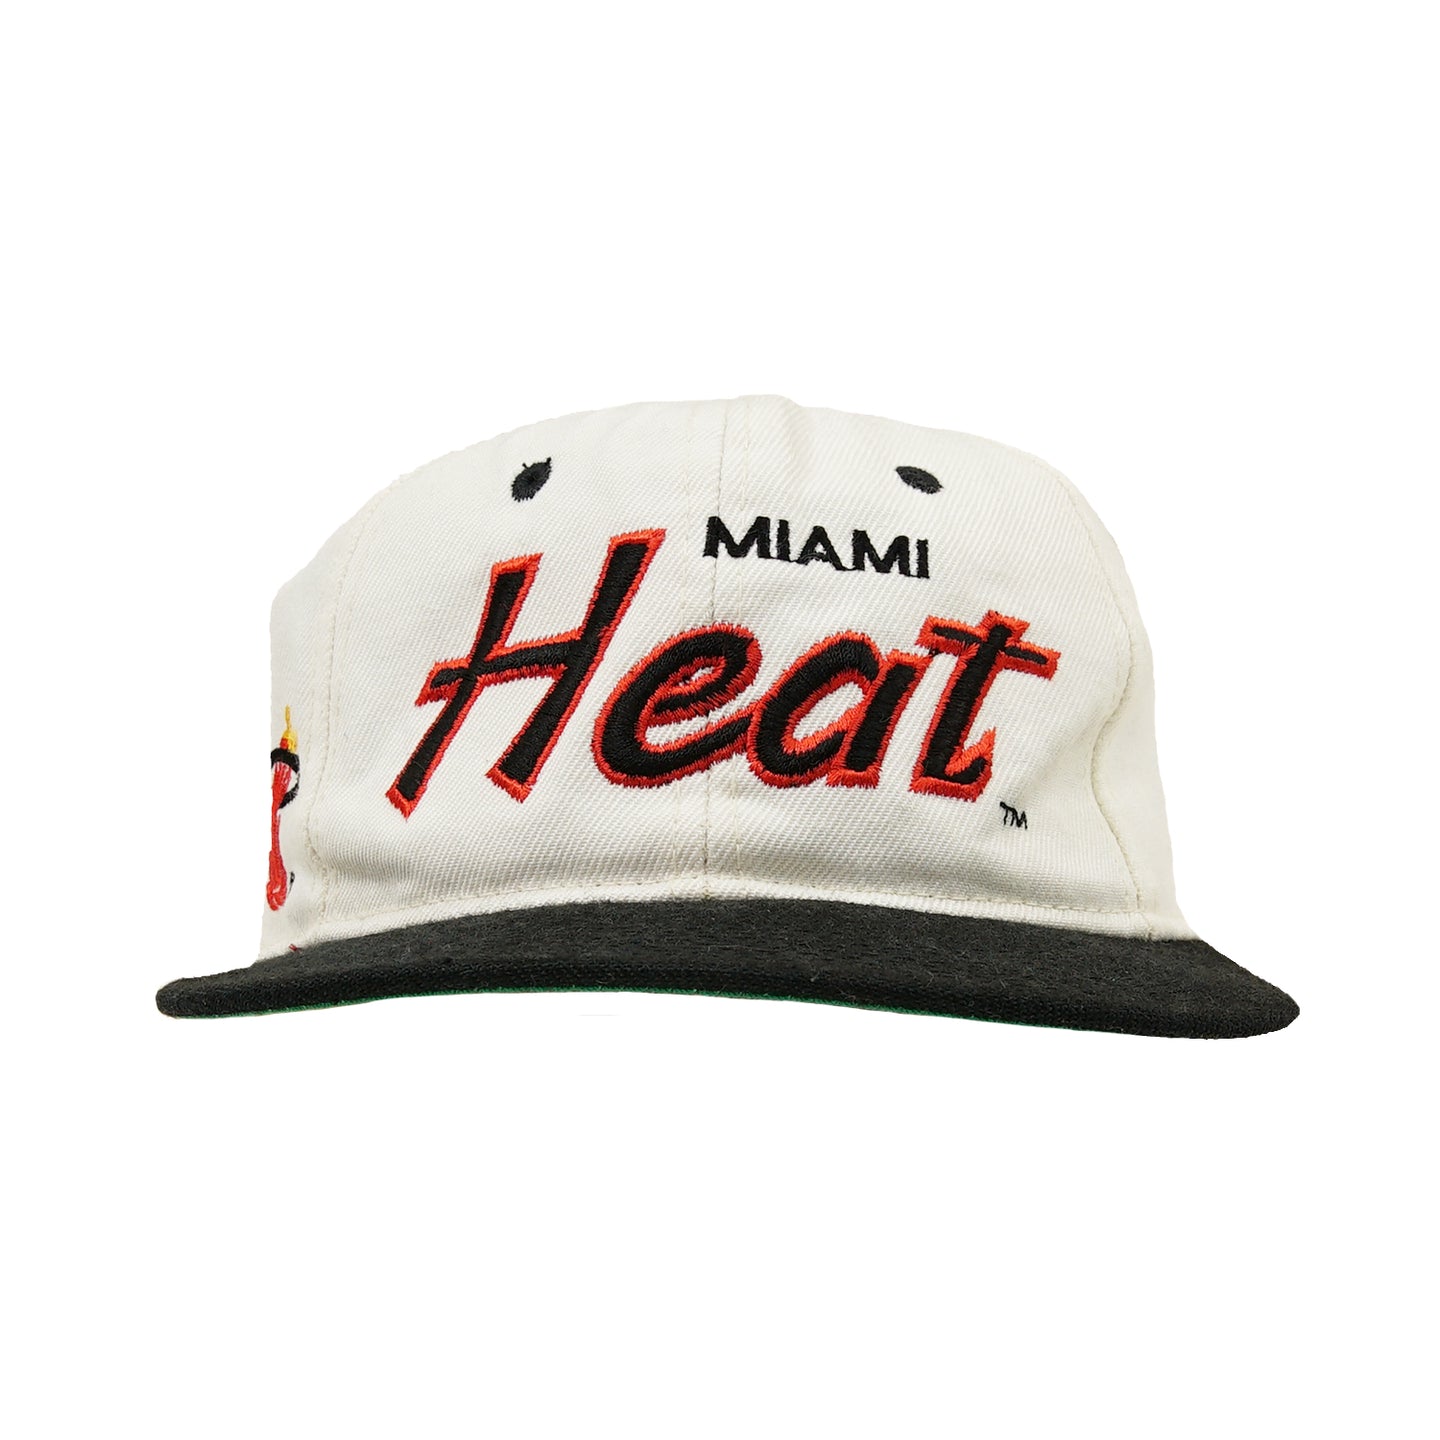 Vintage Miami Heat script snapback